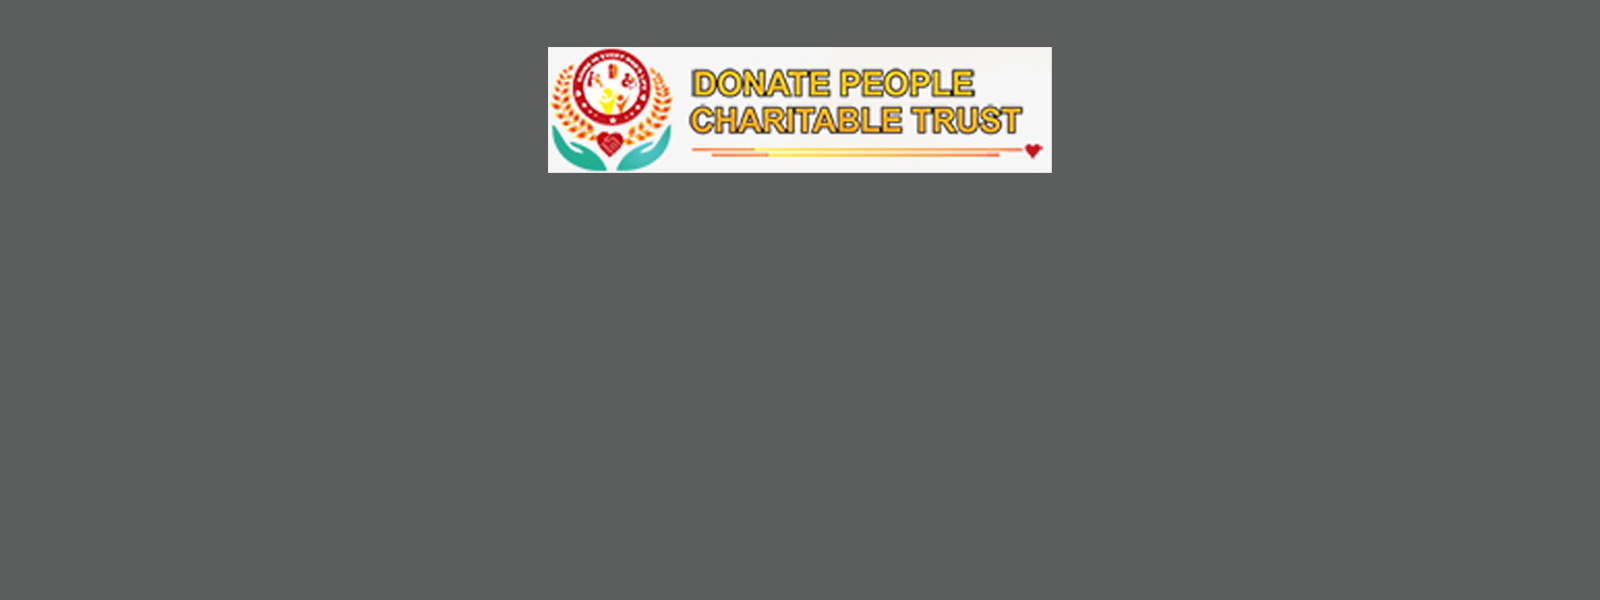 Donate People Charitable Trust